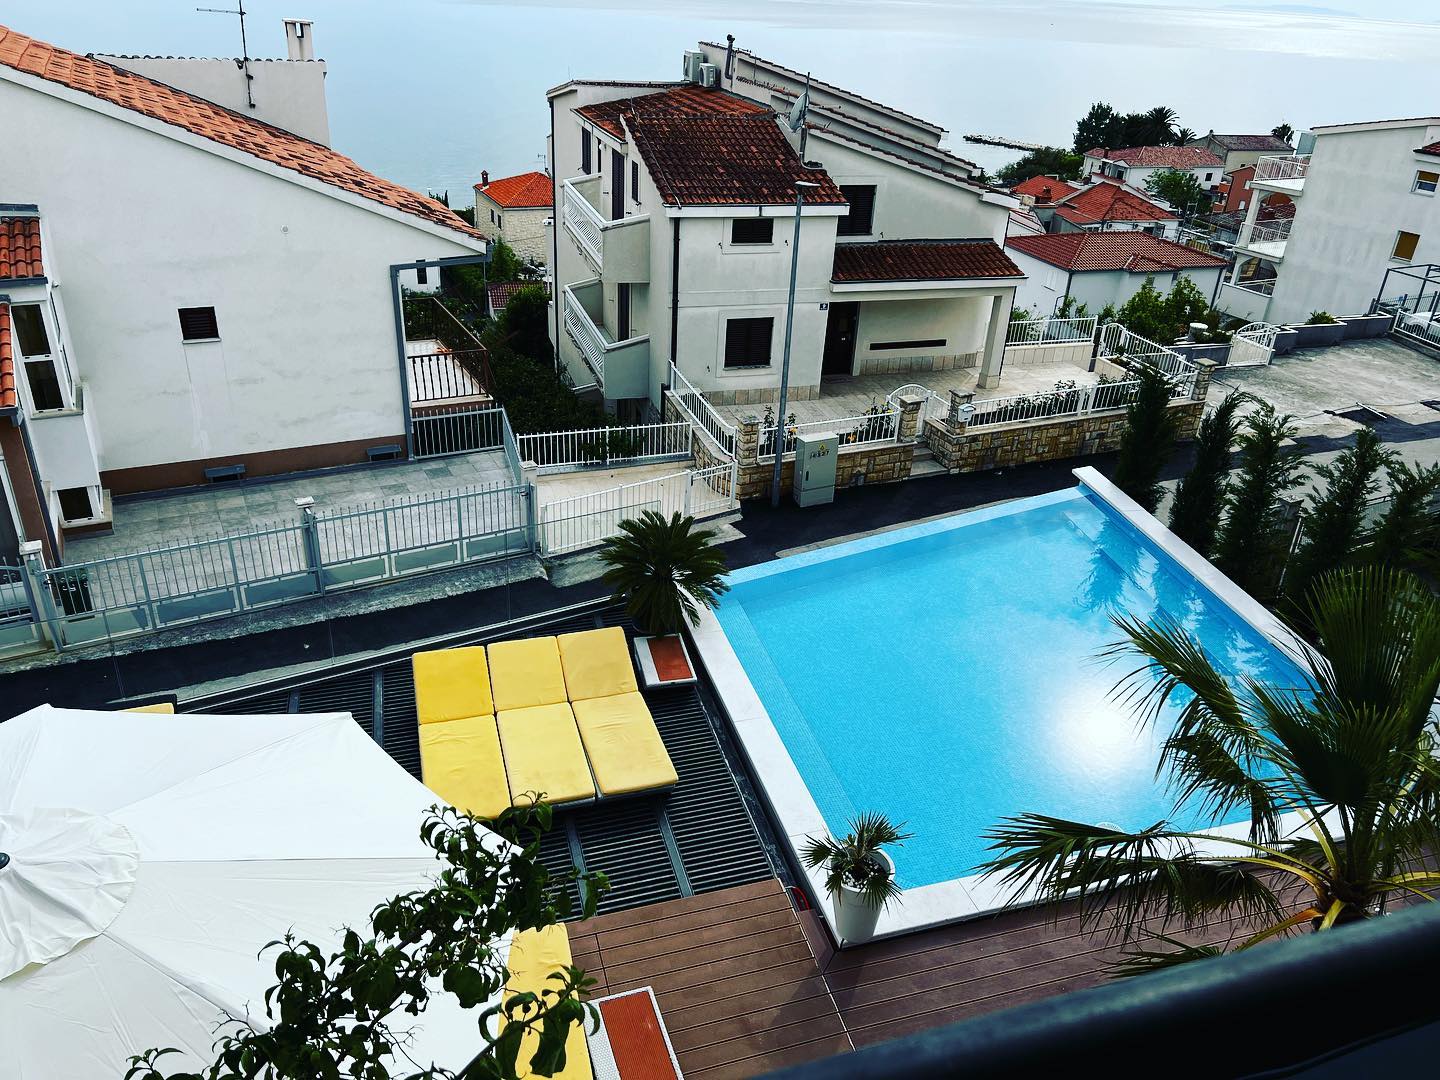 House with pool by aptitud\n#aptikonfa